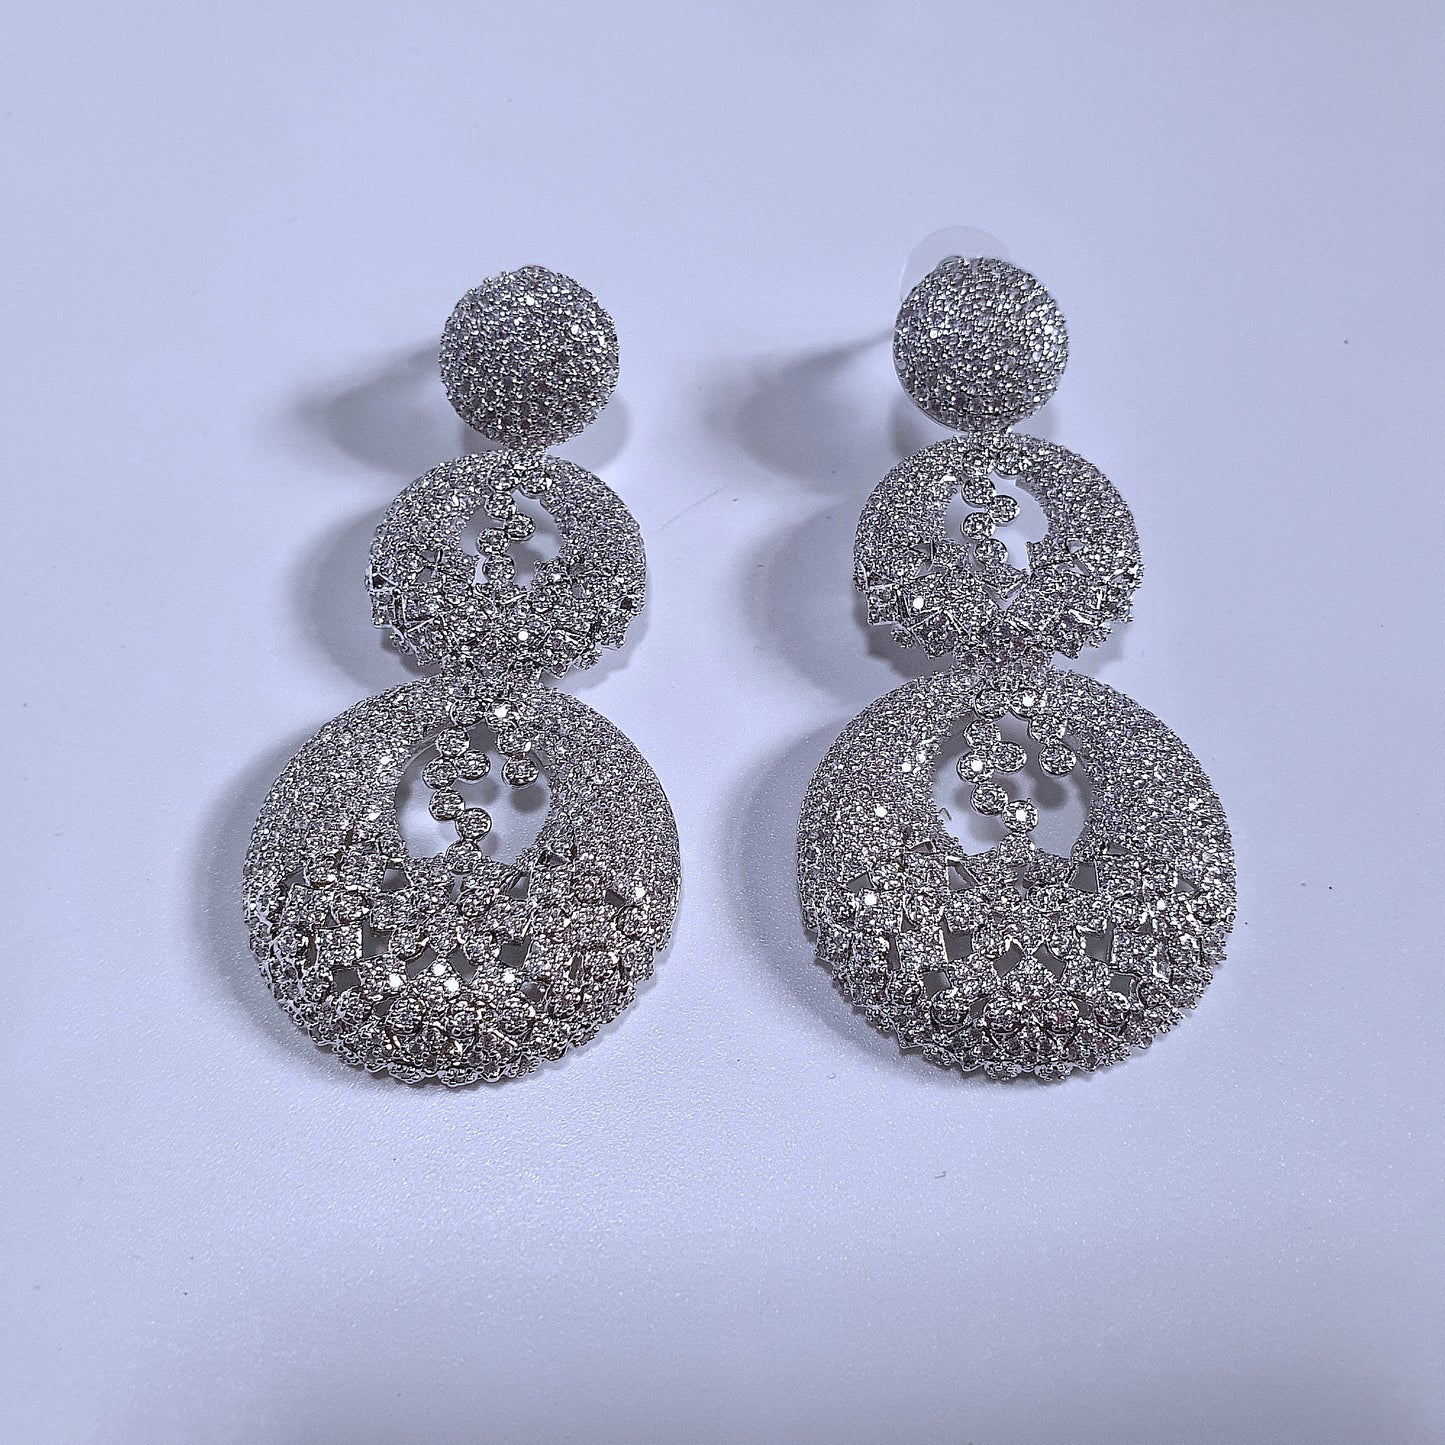 Unique Design Silver Cubic Zirconia Earrings - Bhe Accessories